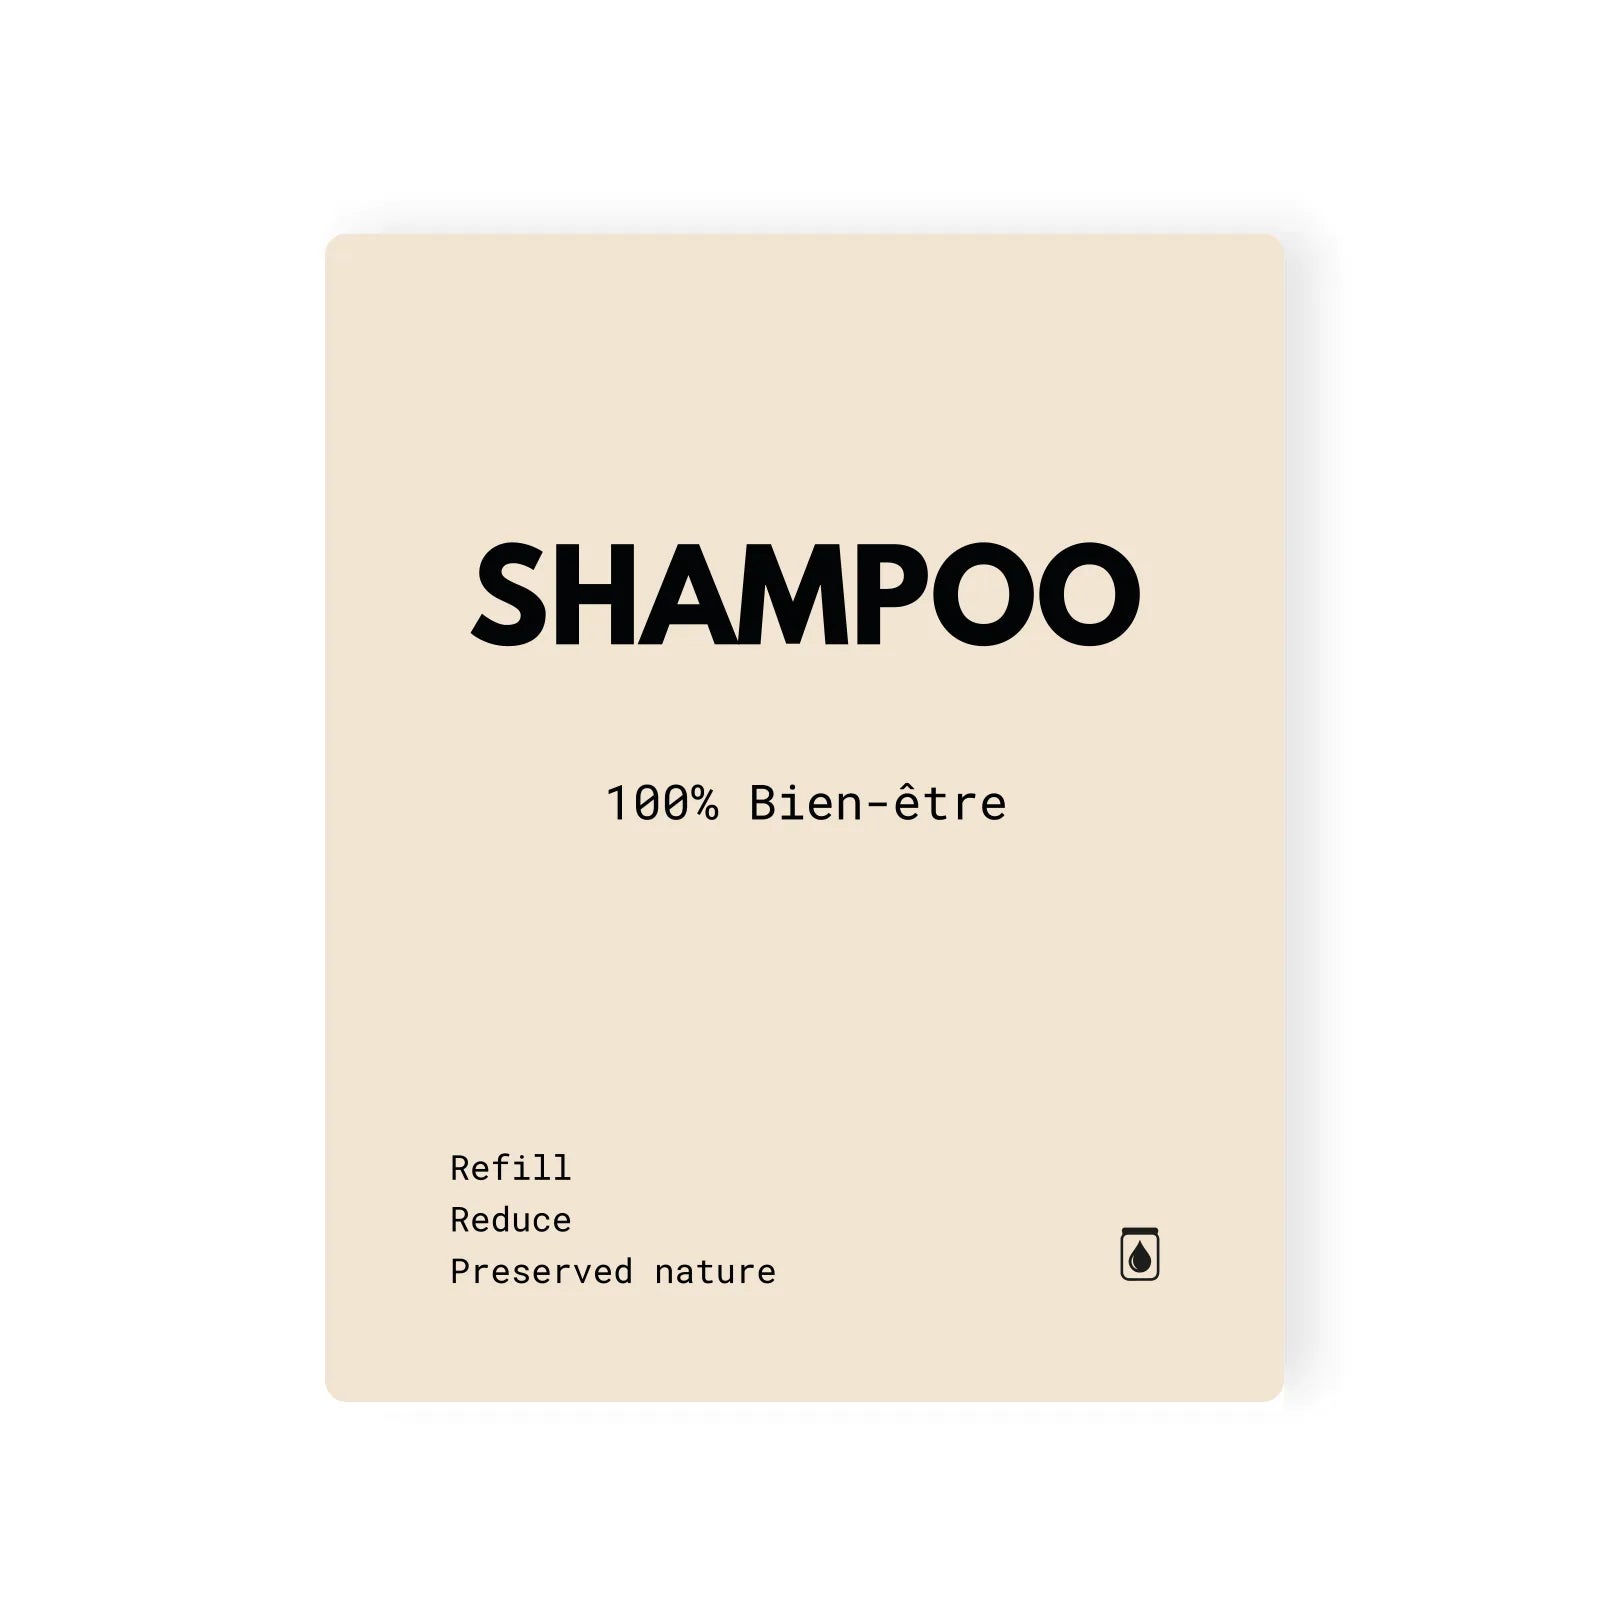 Étiquette SHAMPOO waterproof Beige Refill